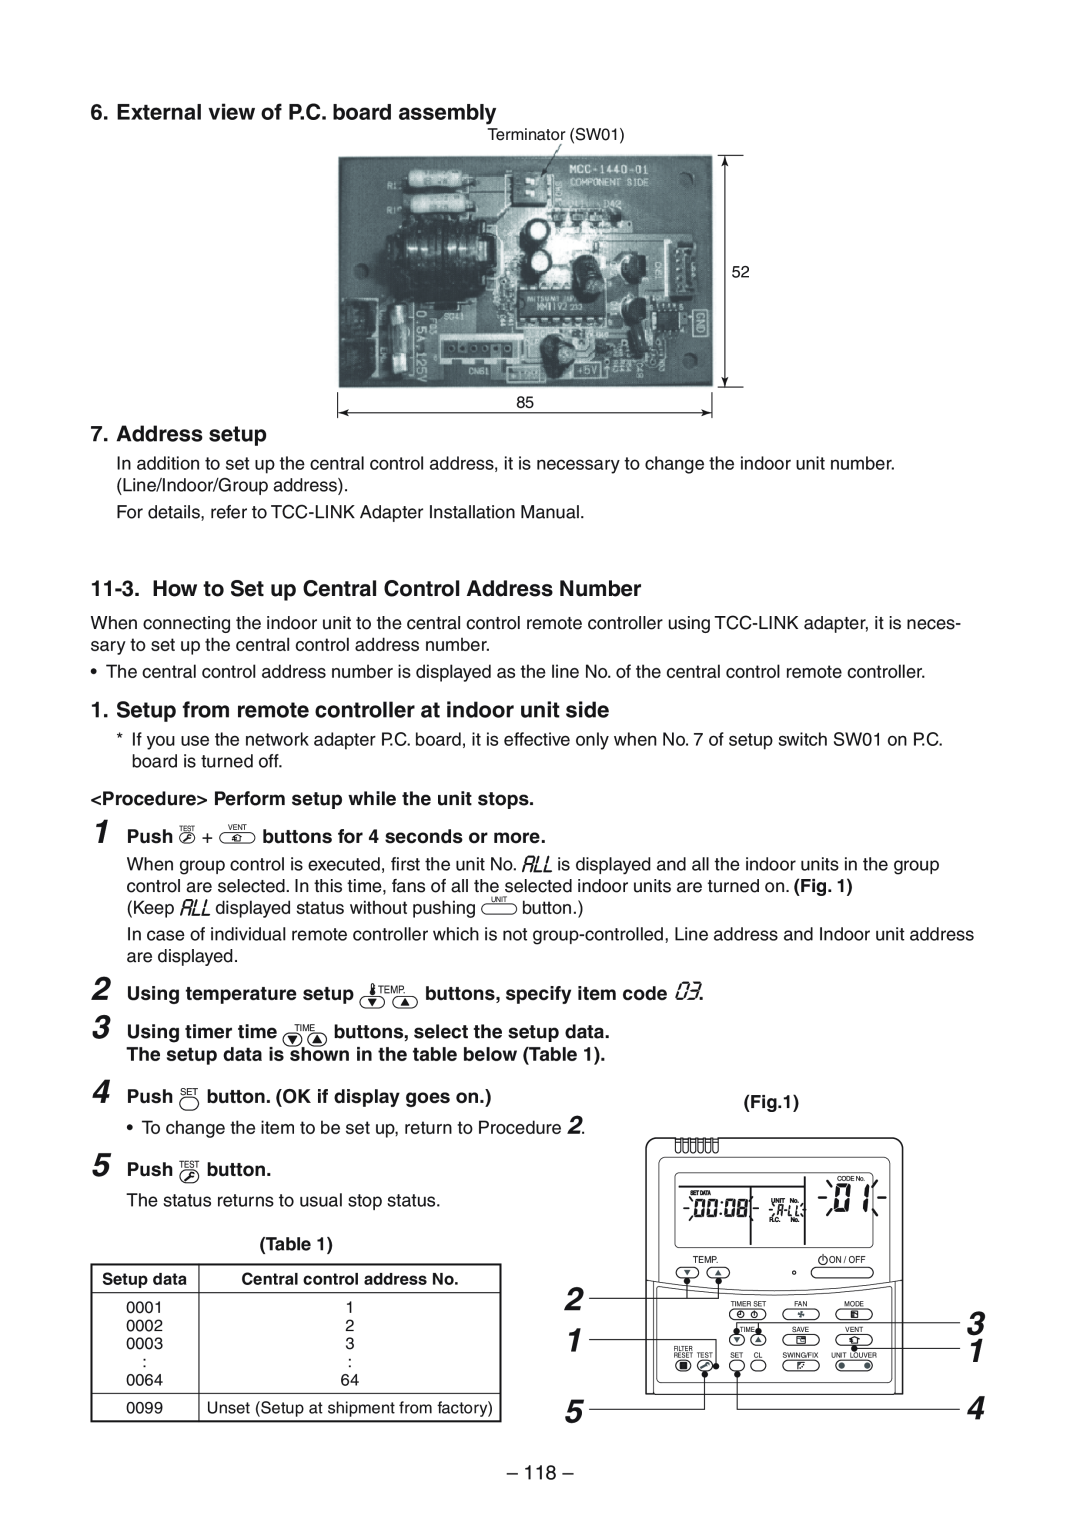 Toshiba RAV-SM1104UT-E 1 2 3, 2 1 5, 3 1 4, External view of P.C. board assembly, Address setup, 118, Push TEST, button 